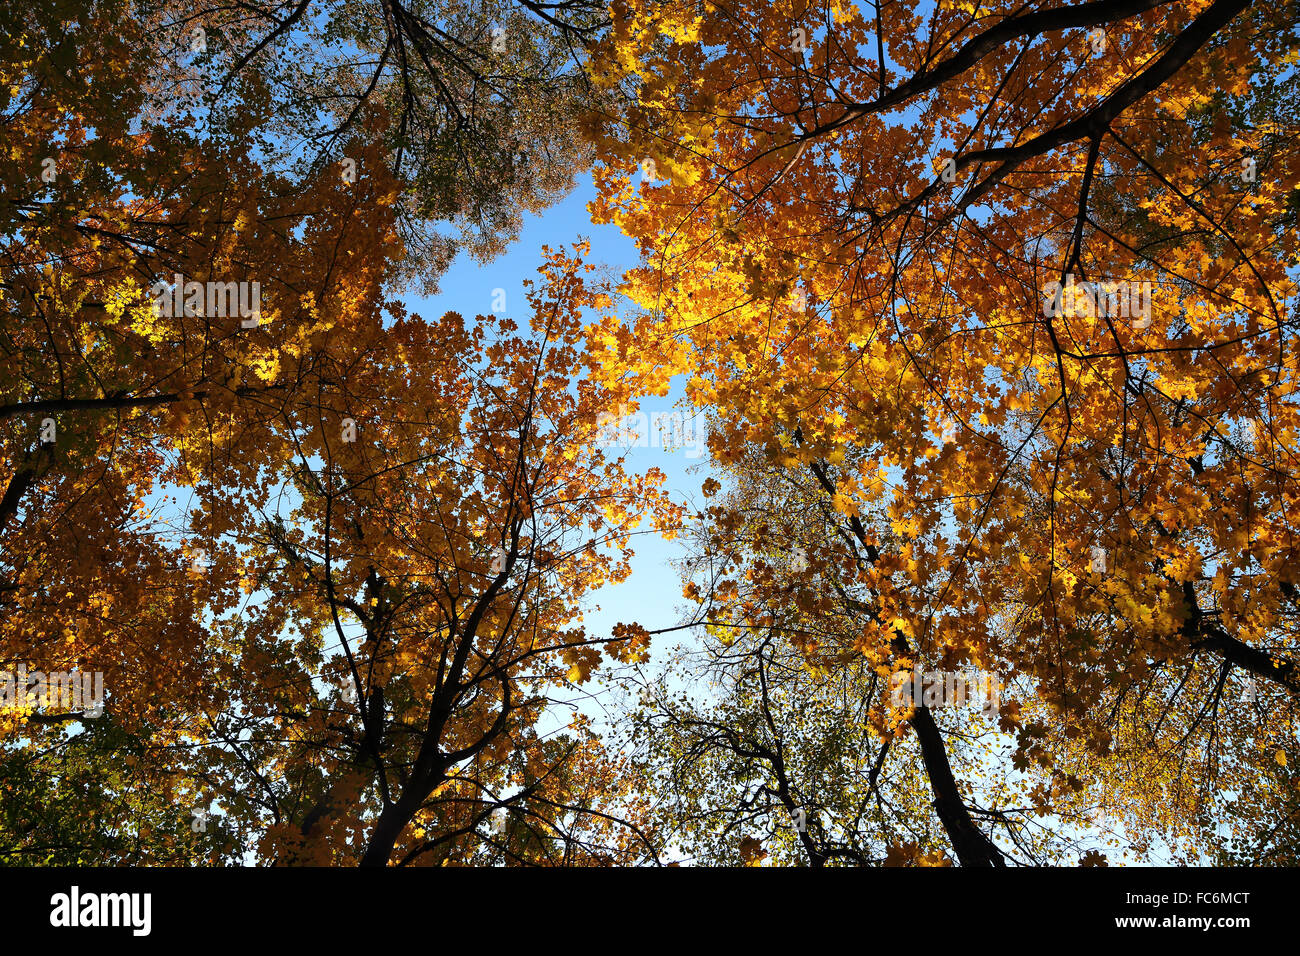 autumn leaves on trees under sky Stock Photo